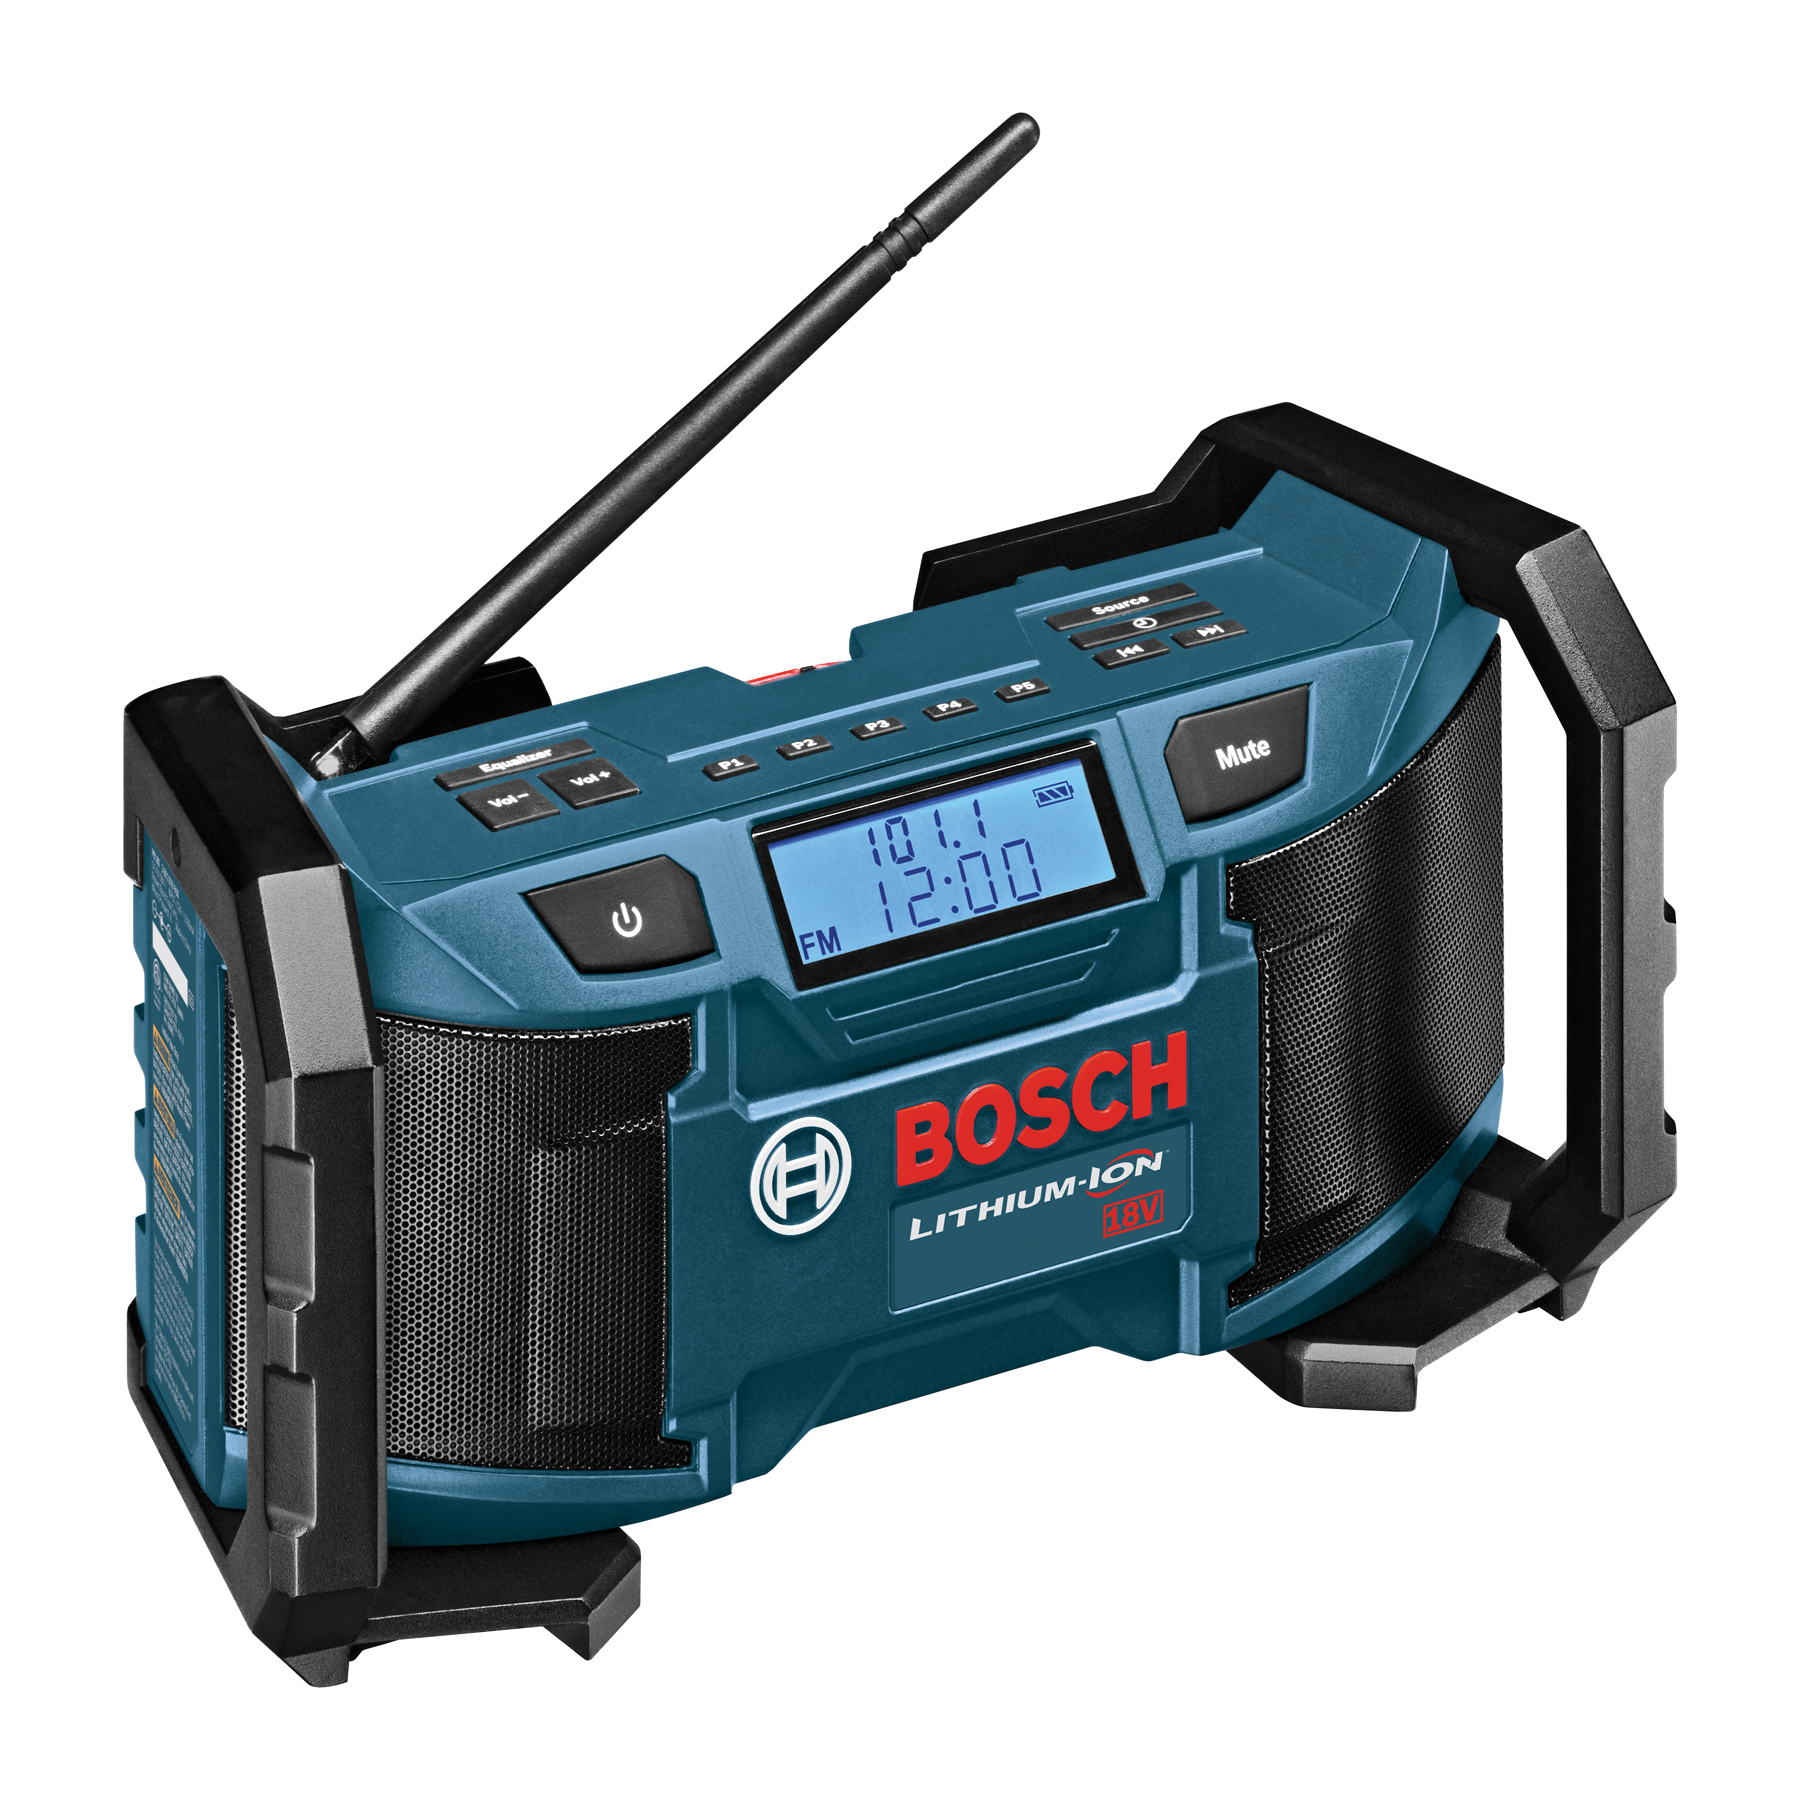 Bosch 18-volt Water Resistant Jobsite Radio at